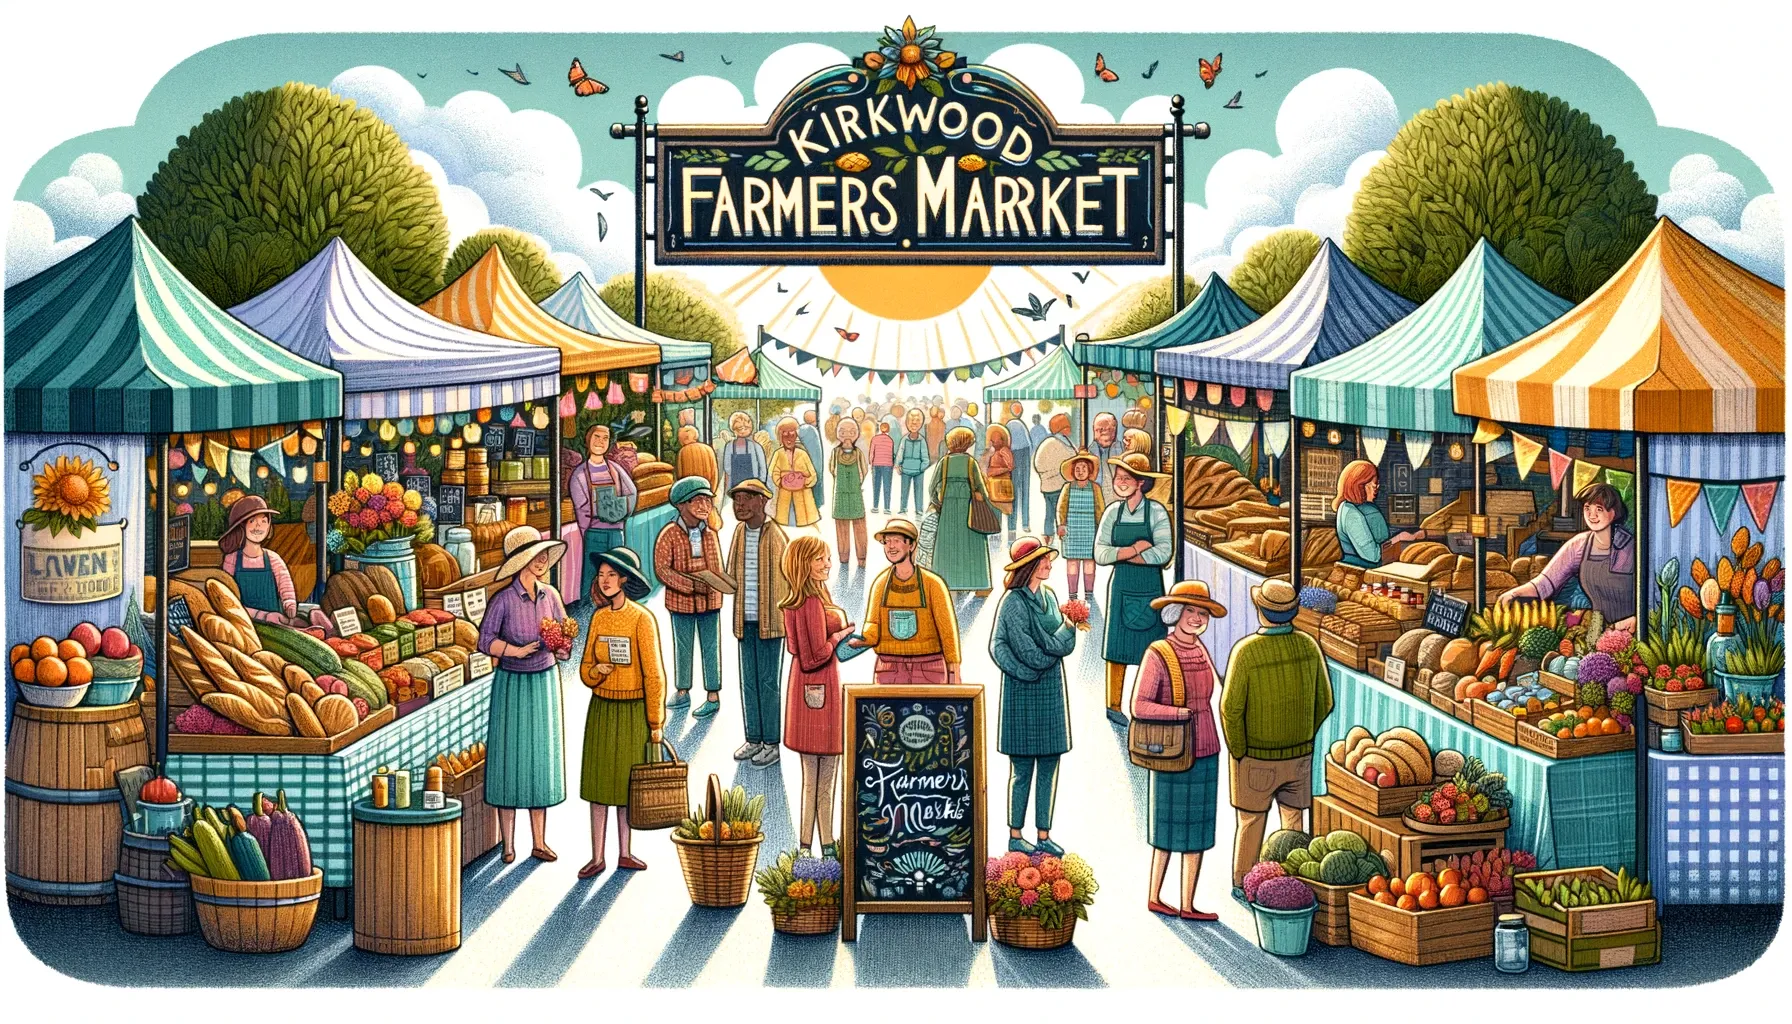 Kirkwood Farmers Market: A Hub of Freshness and Community